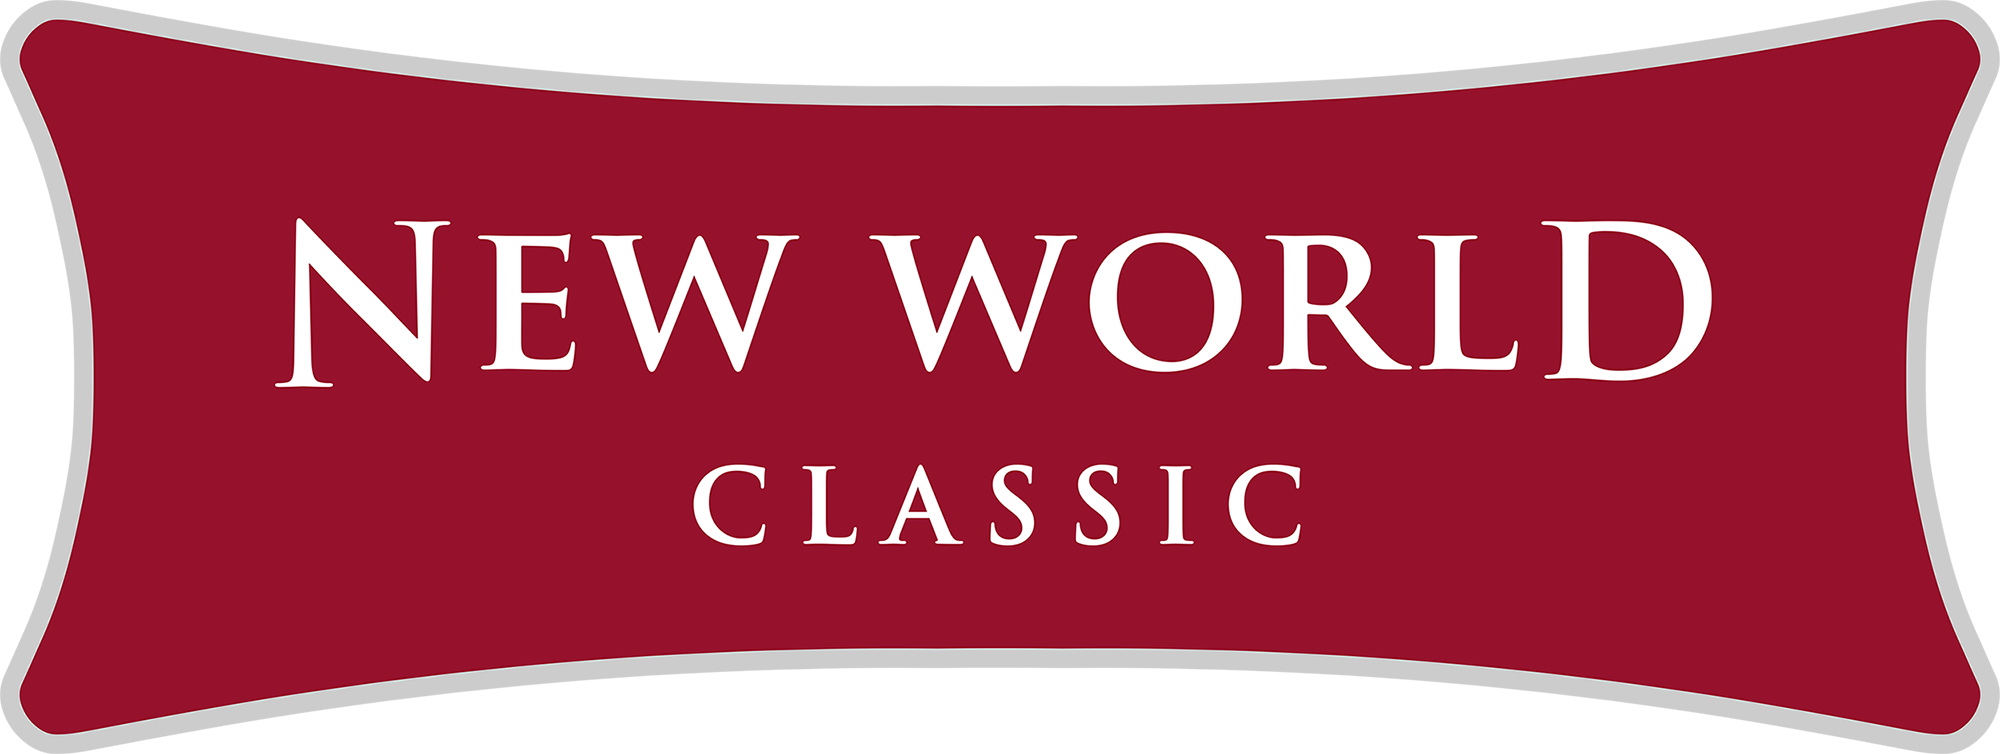 New World Classic